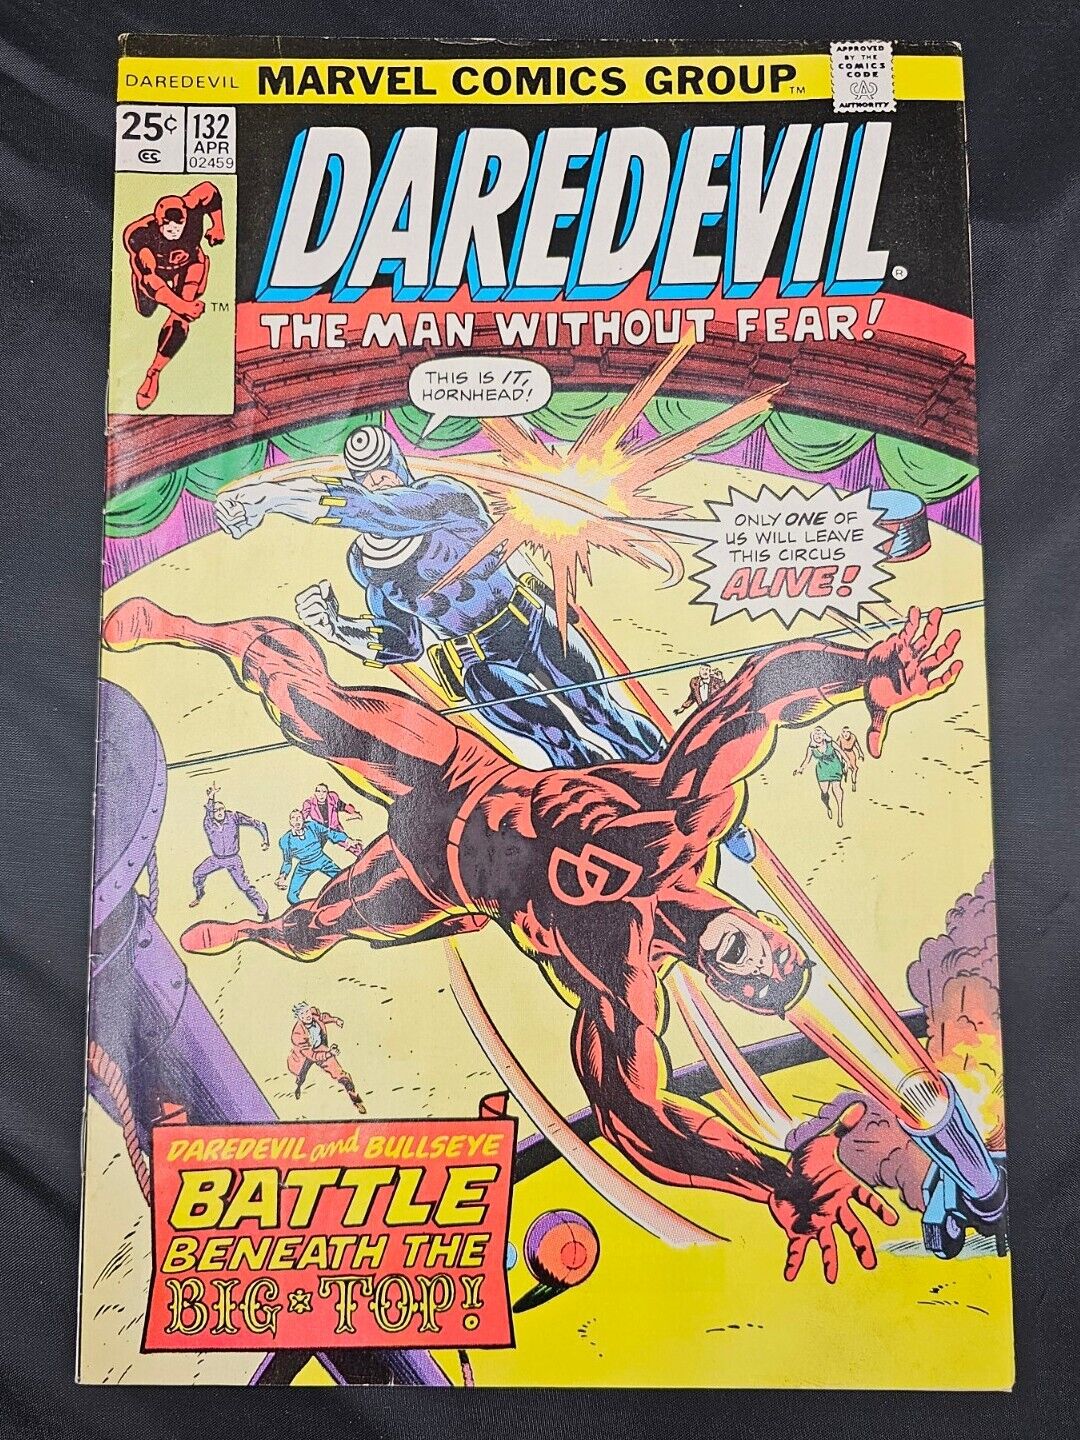 Vintage Daredevil #132 2nd Appearance of Bullseye Marvel Comic Book